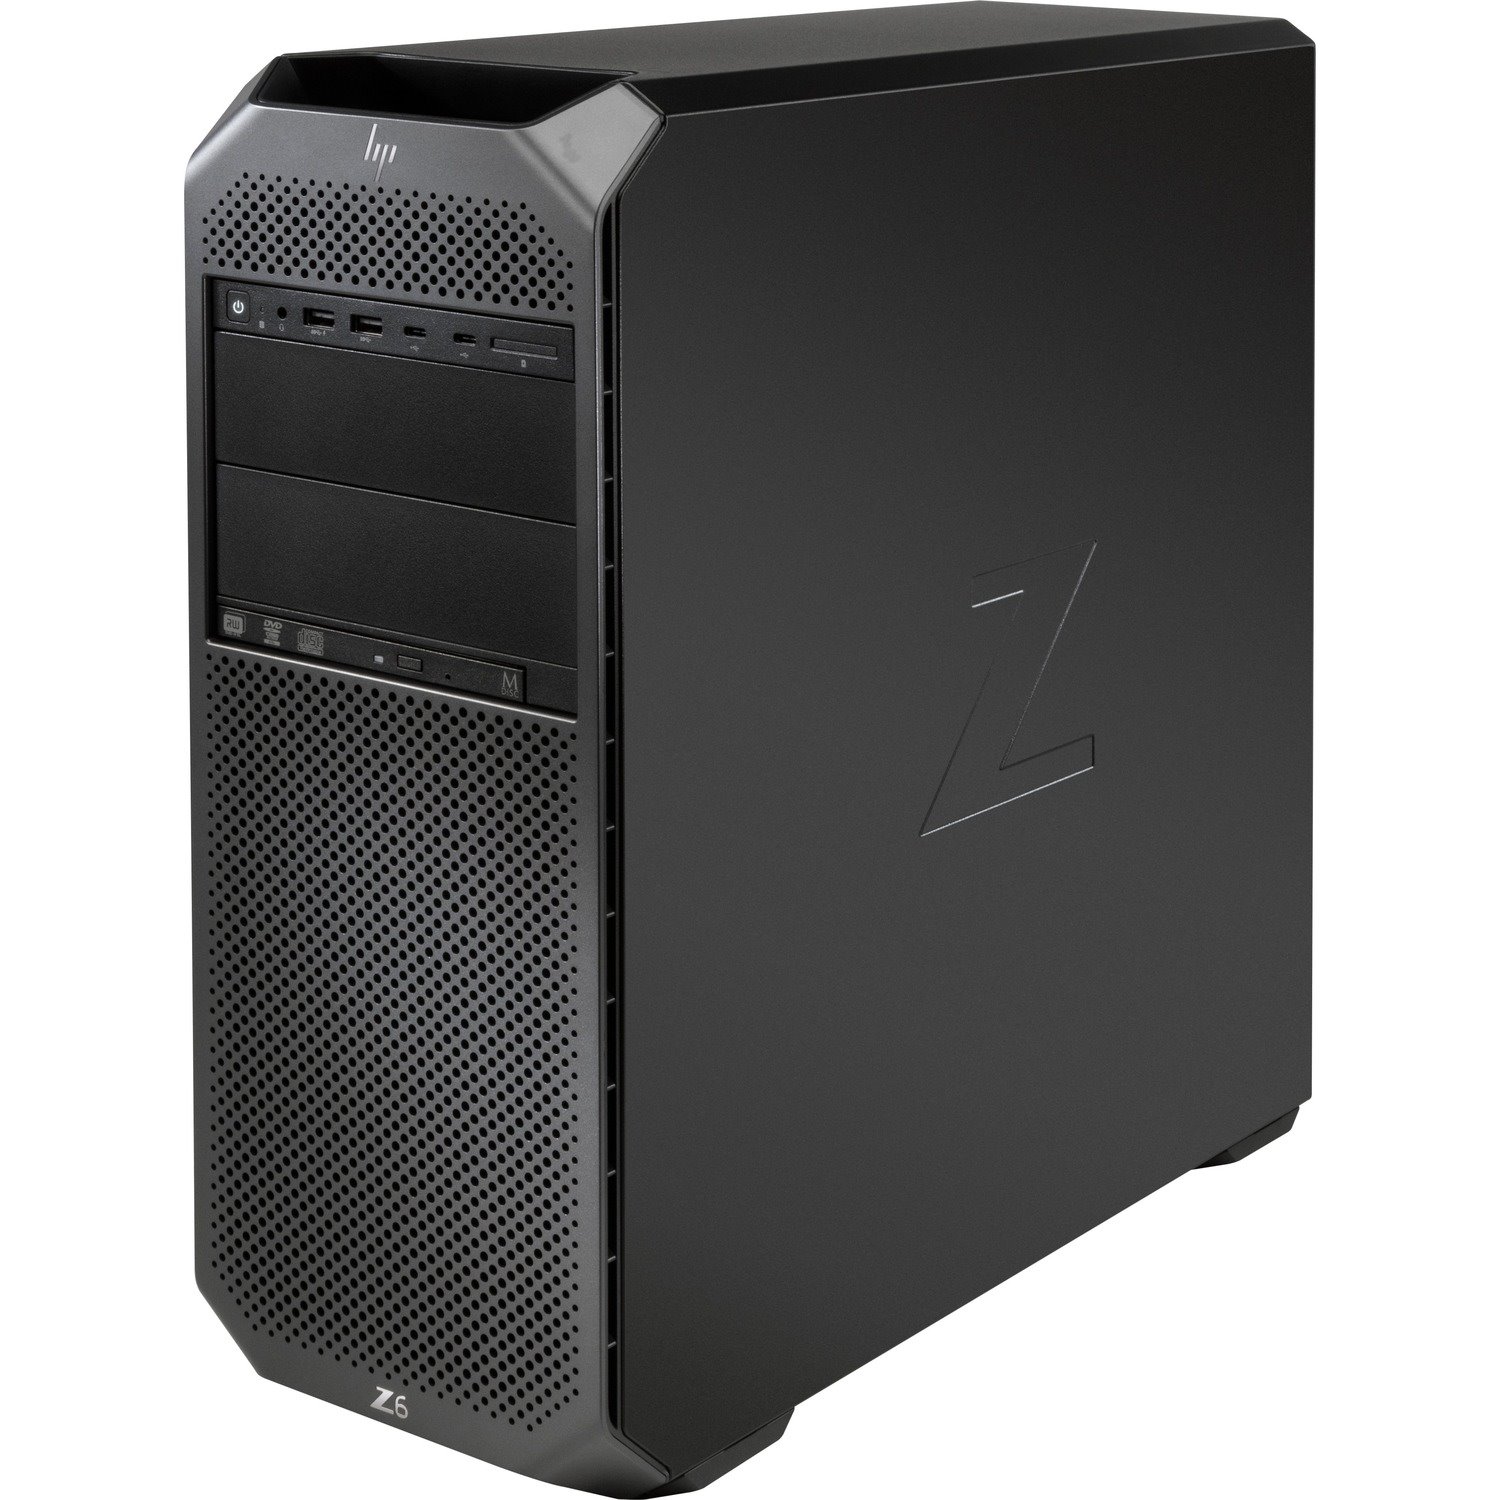 HP Z6 G4 Workstation - Intel Xeon Silver 4208 - 32 GB - 256 GB SSD - Tower - Black